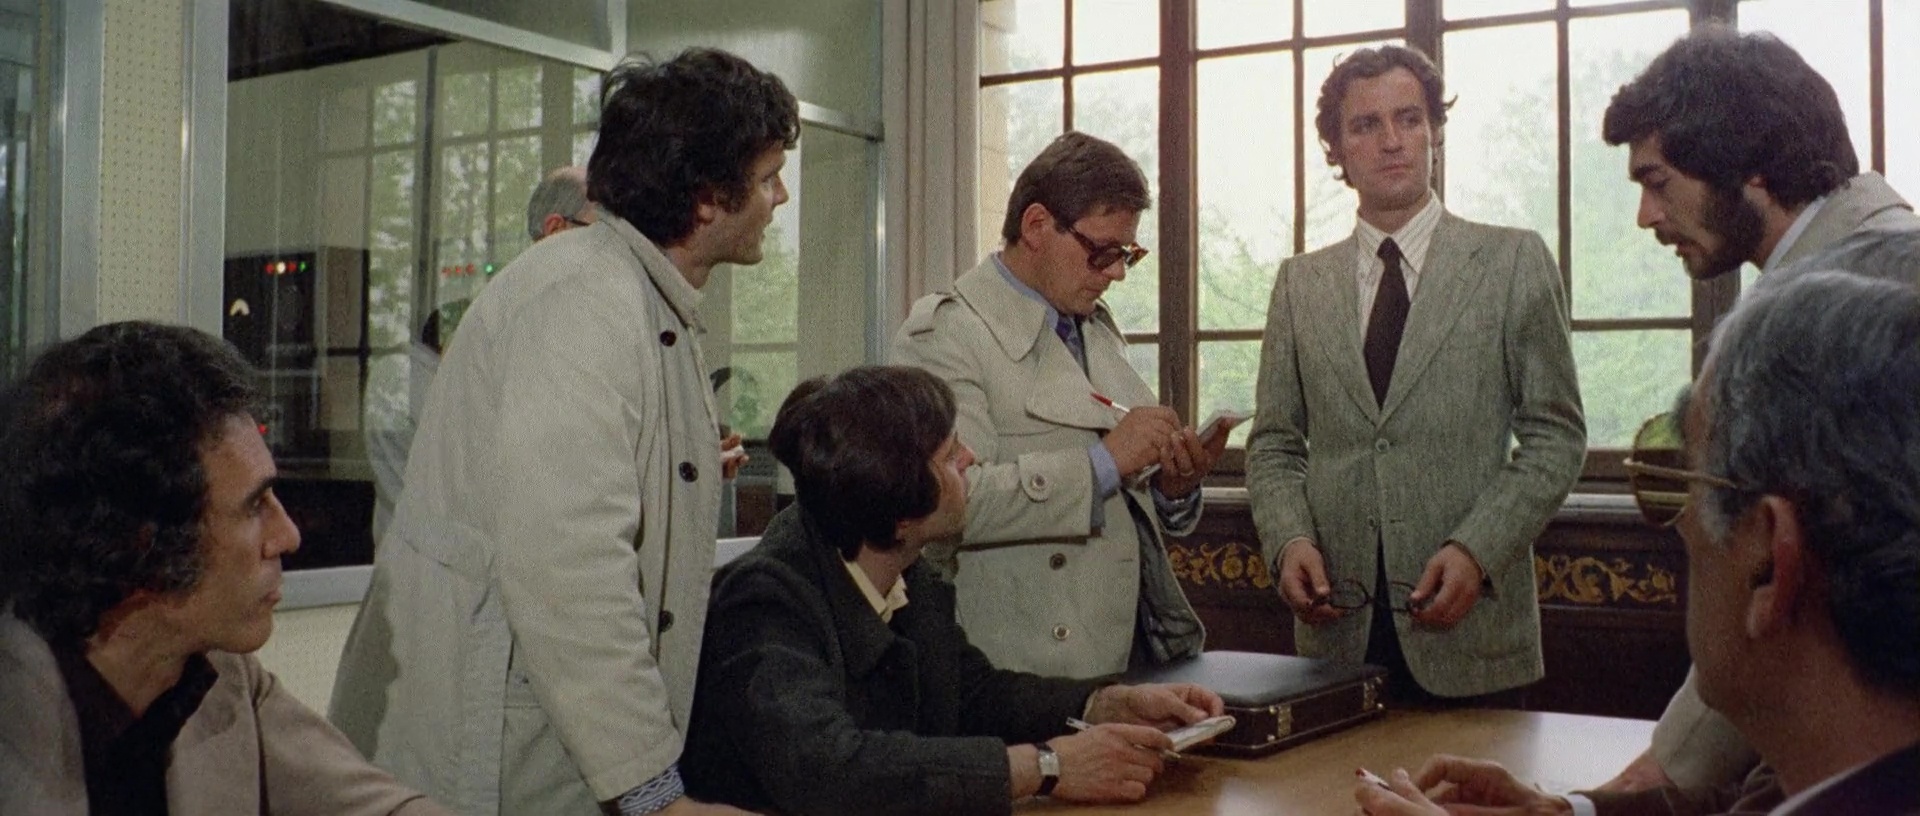 La polizia chiede aiuto (1974) 1.jpg